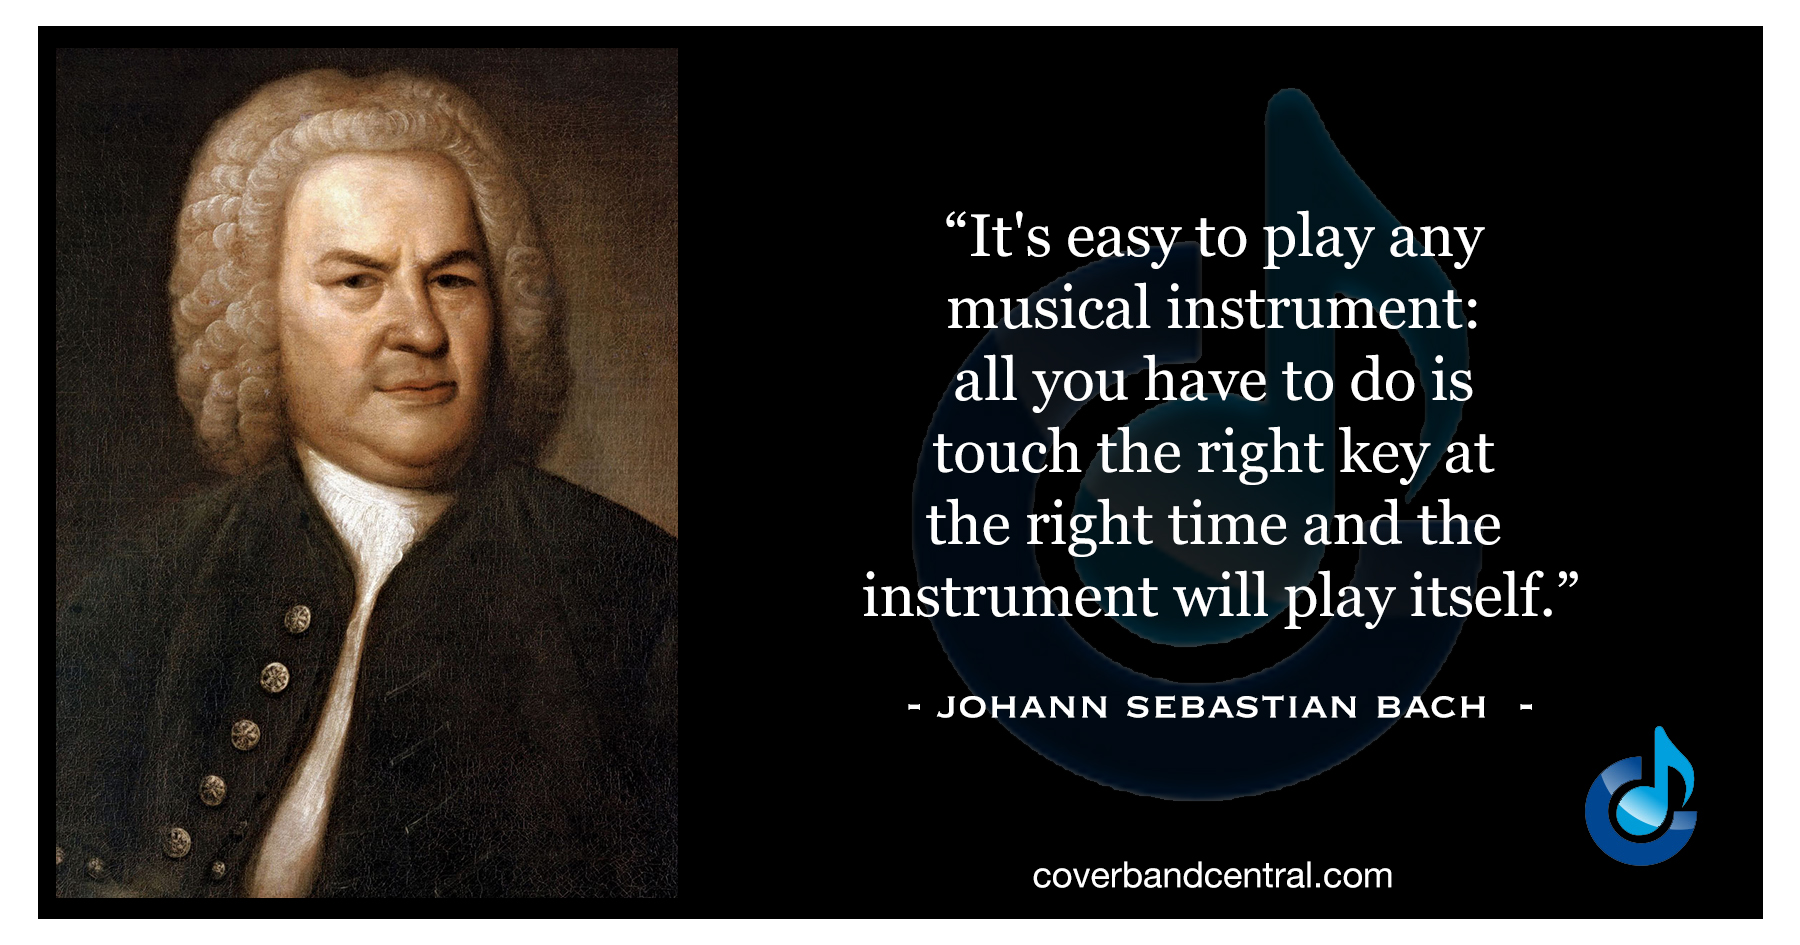 Johann Sebastian Bach quote